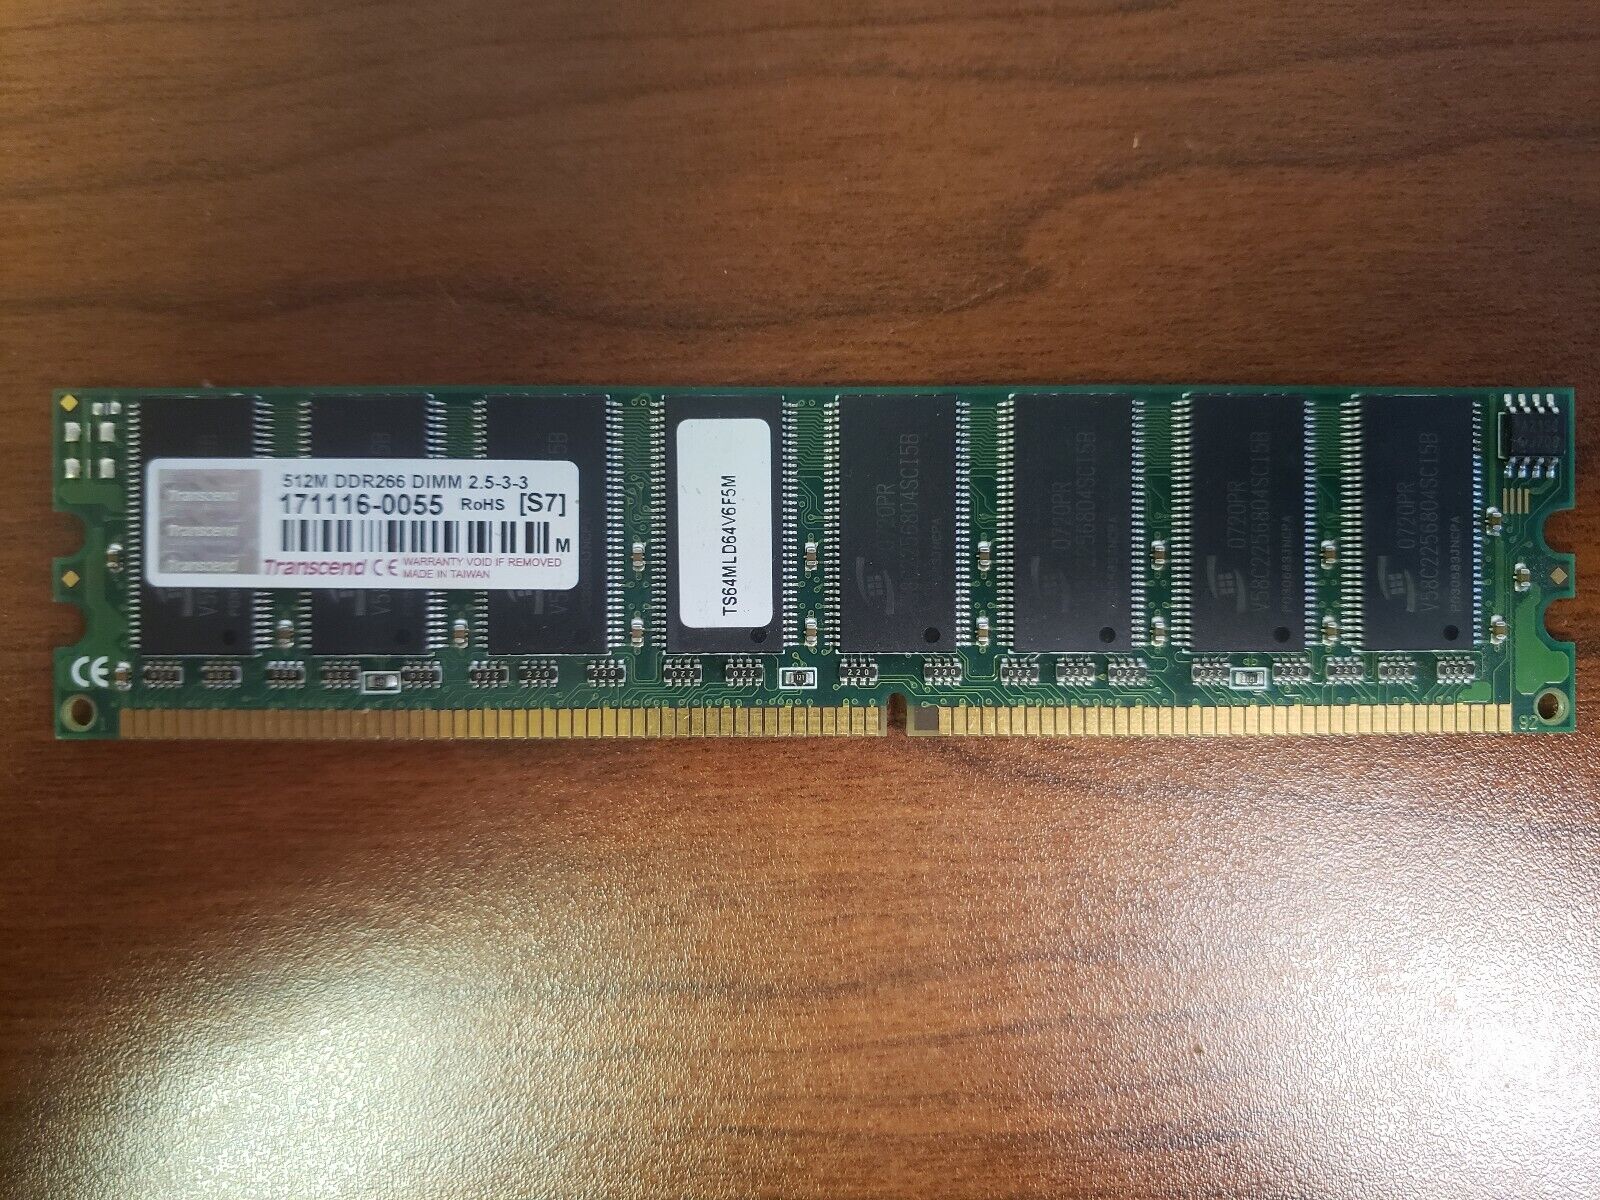 TRANSCEND 512M DDR266 DIMM 2.5-3-3 PC 2100 Memory RAM Modules